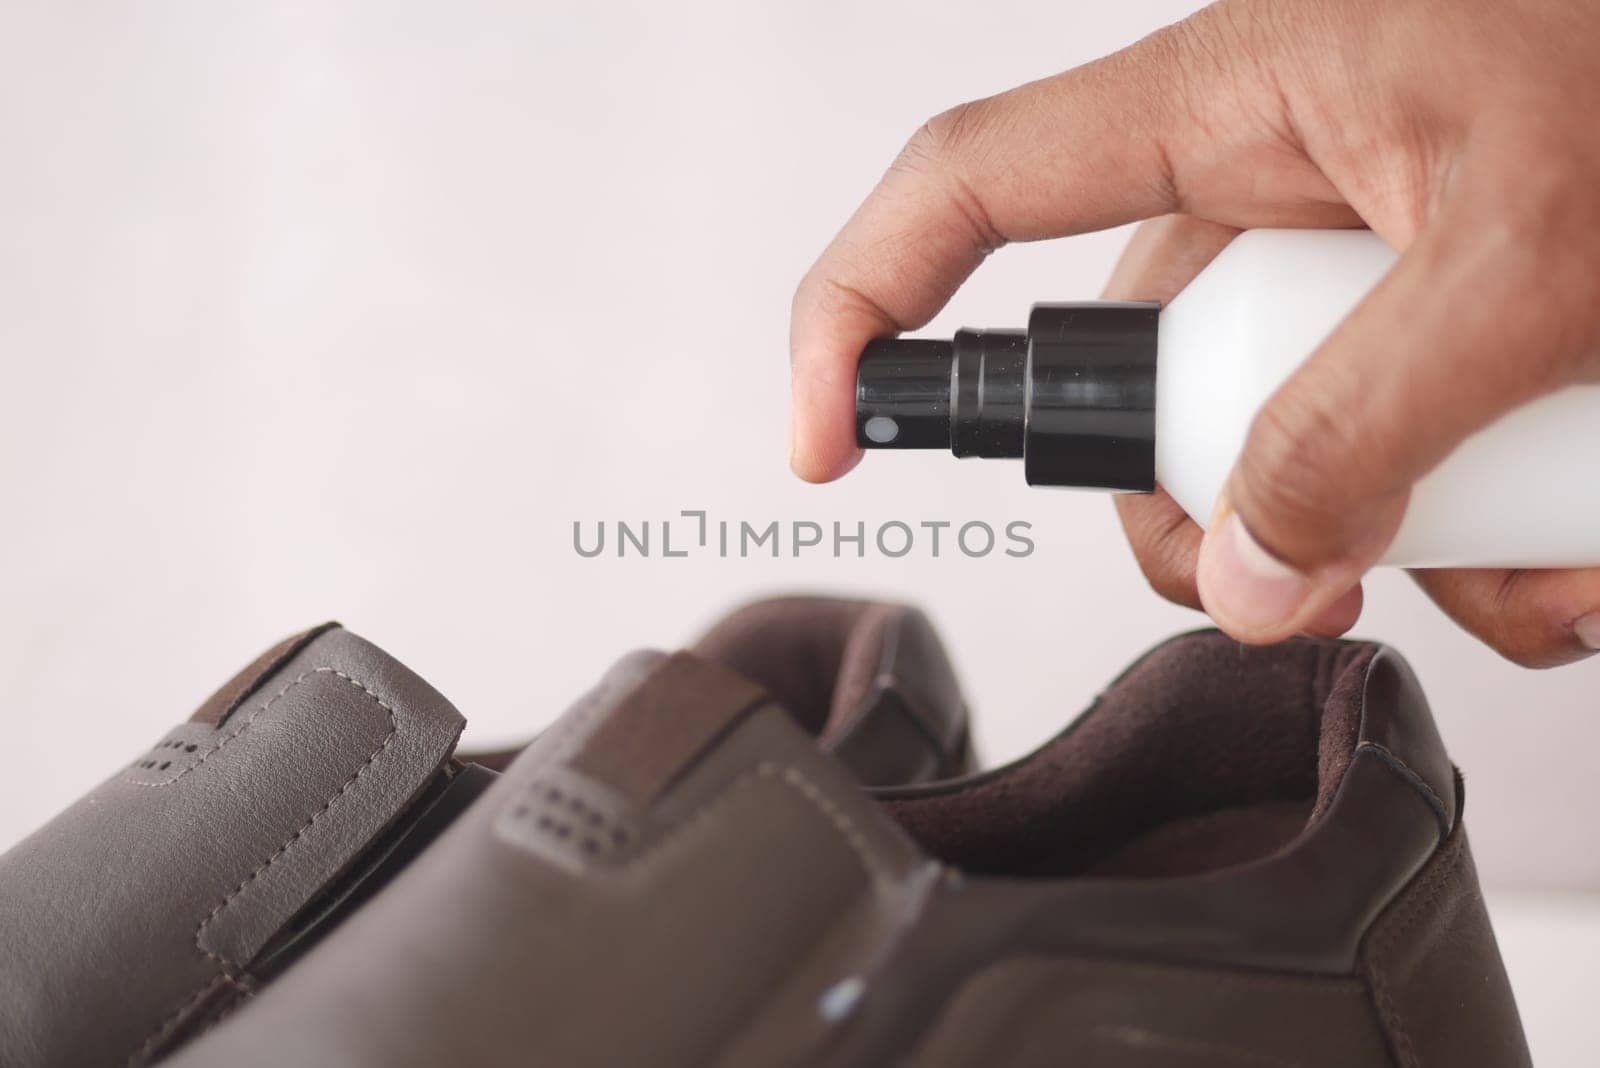 spraying deodorant on sweaty shoes